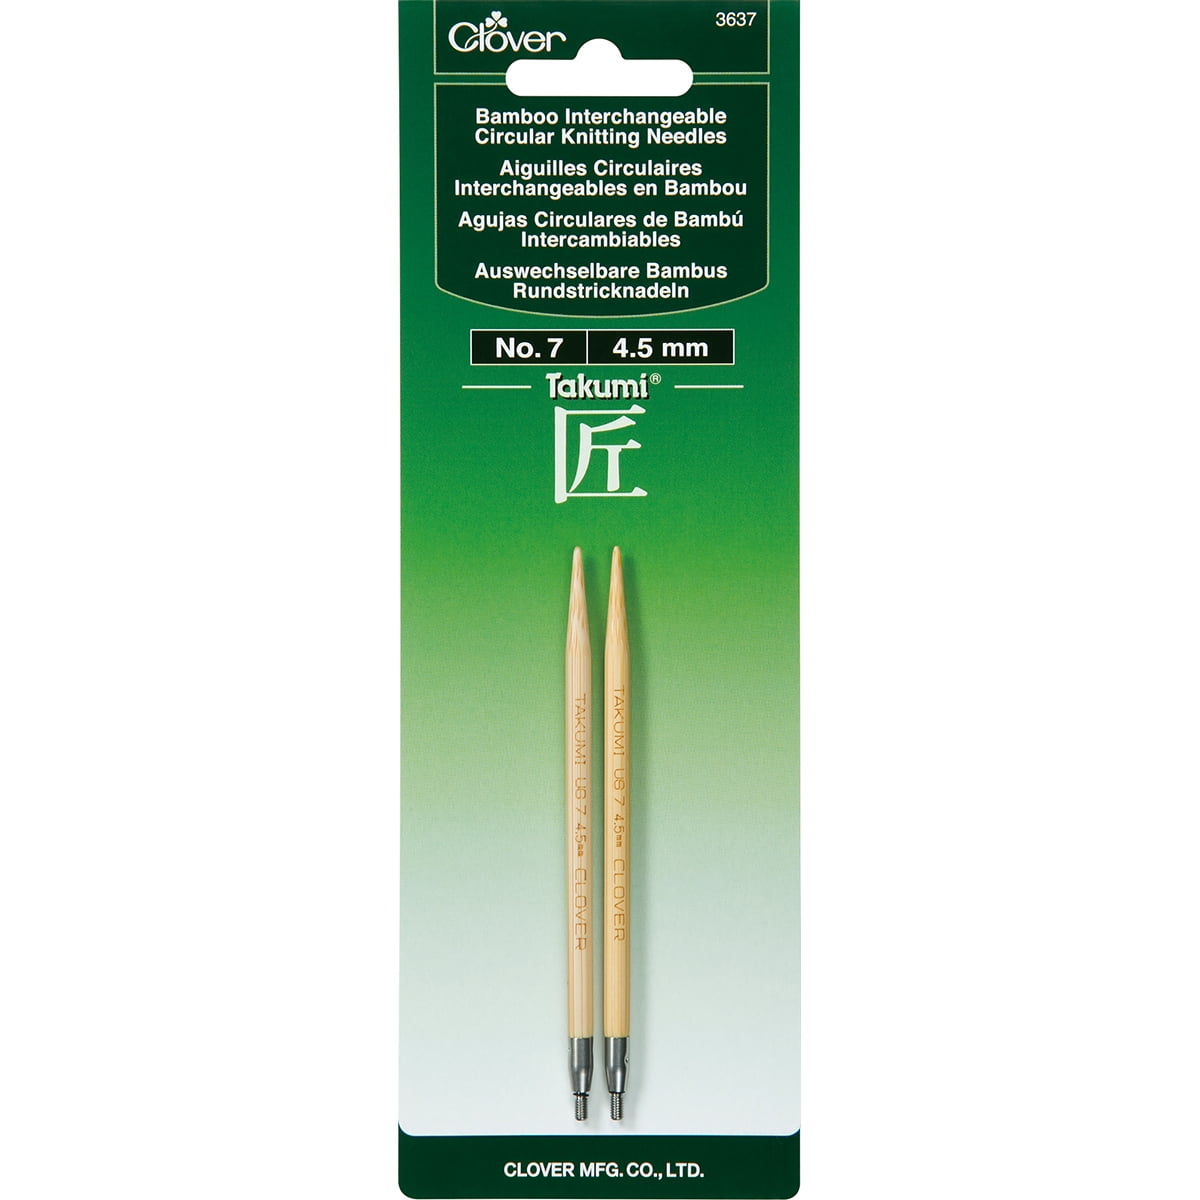 Thoughts on Clover Takumi interchangeable needle set/bamboo needles? :  r/knitting